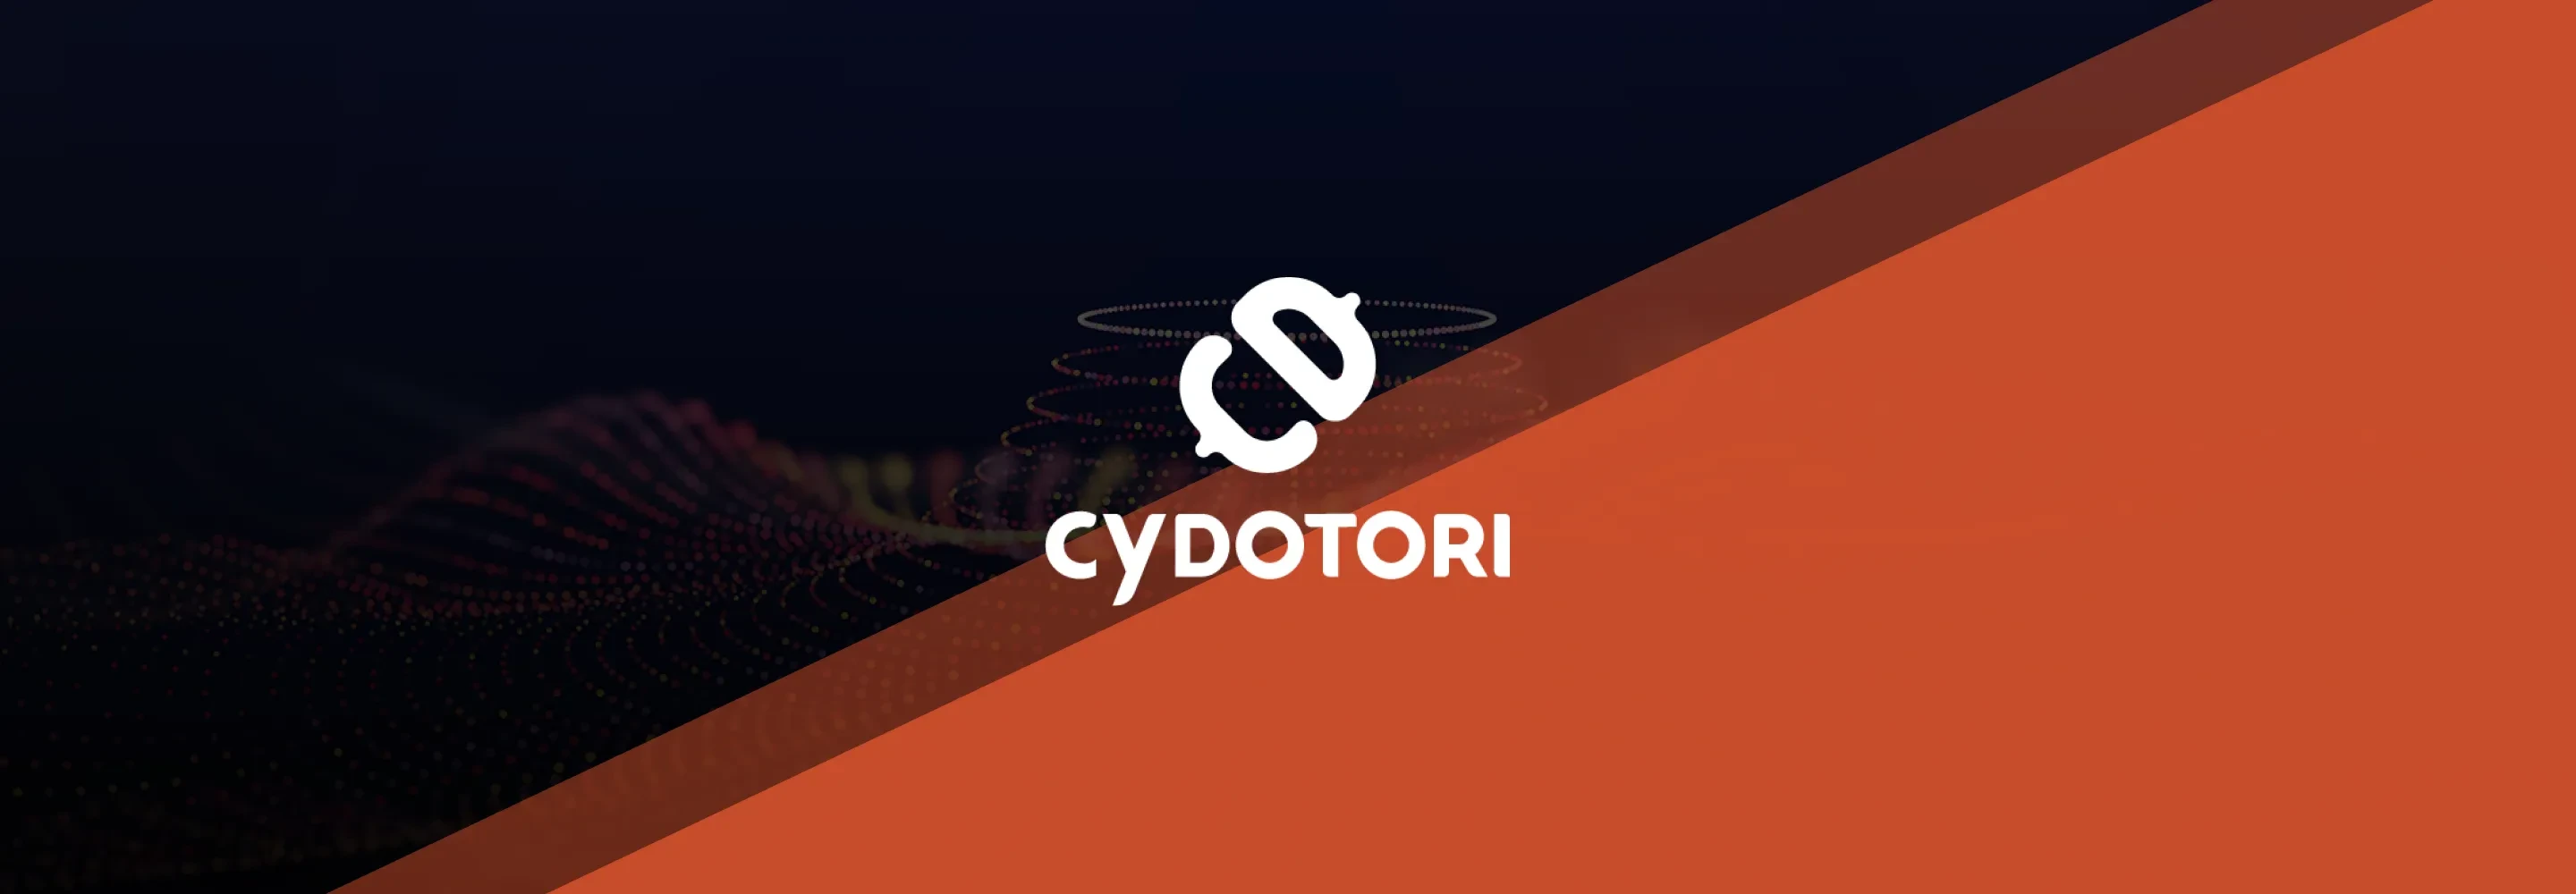 CyDotori Token